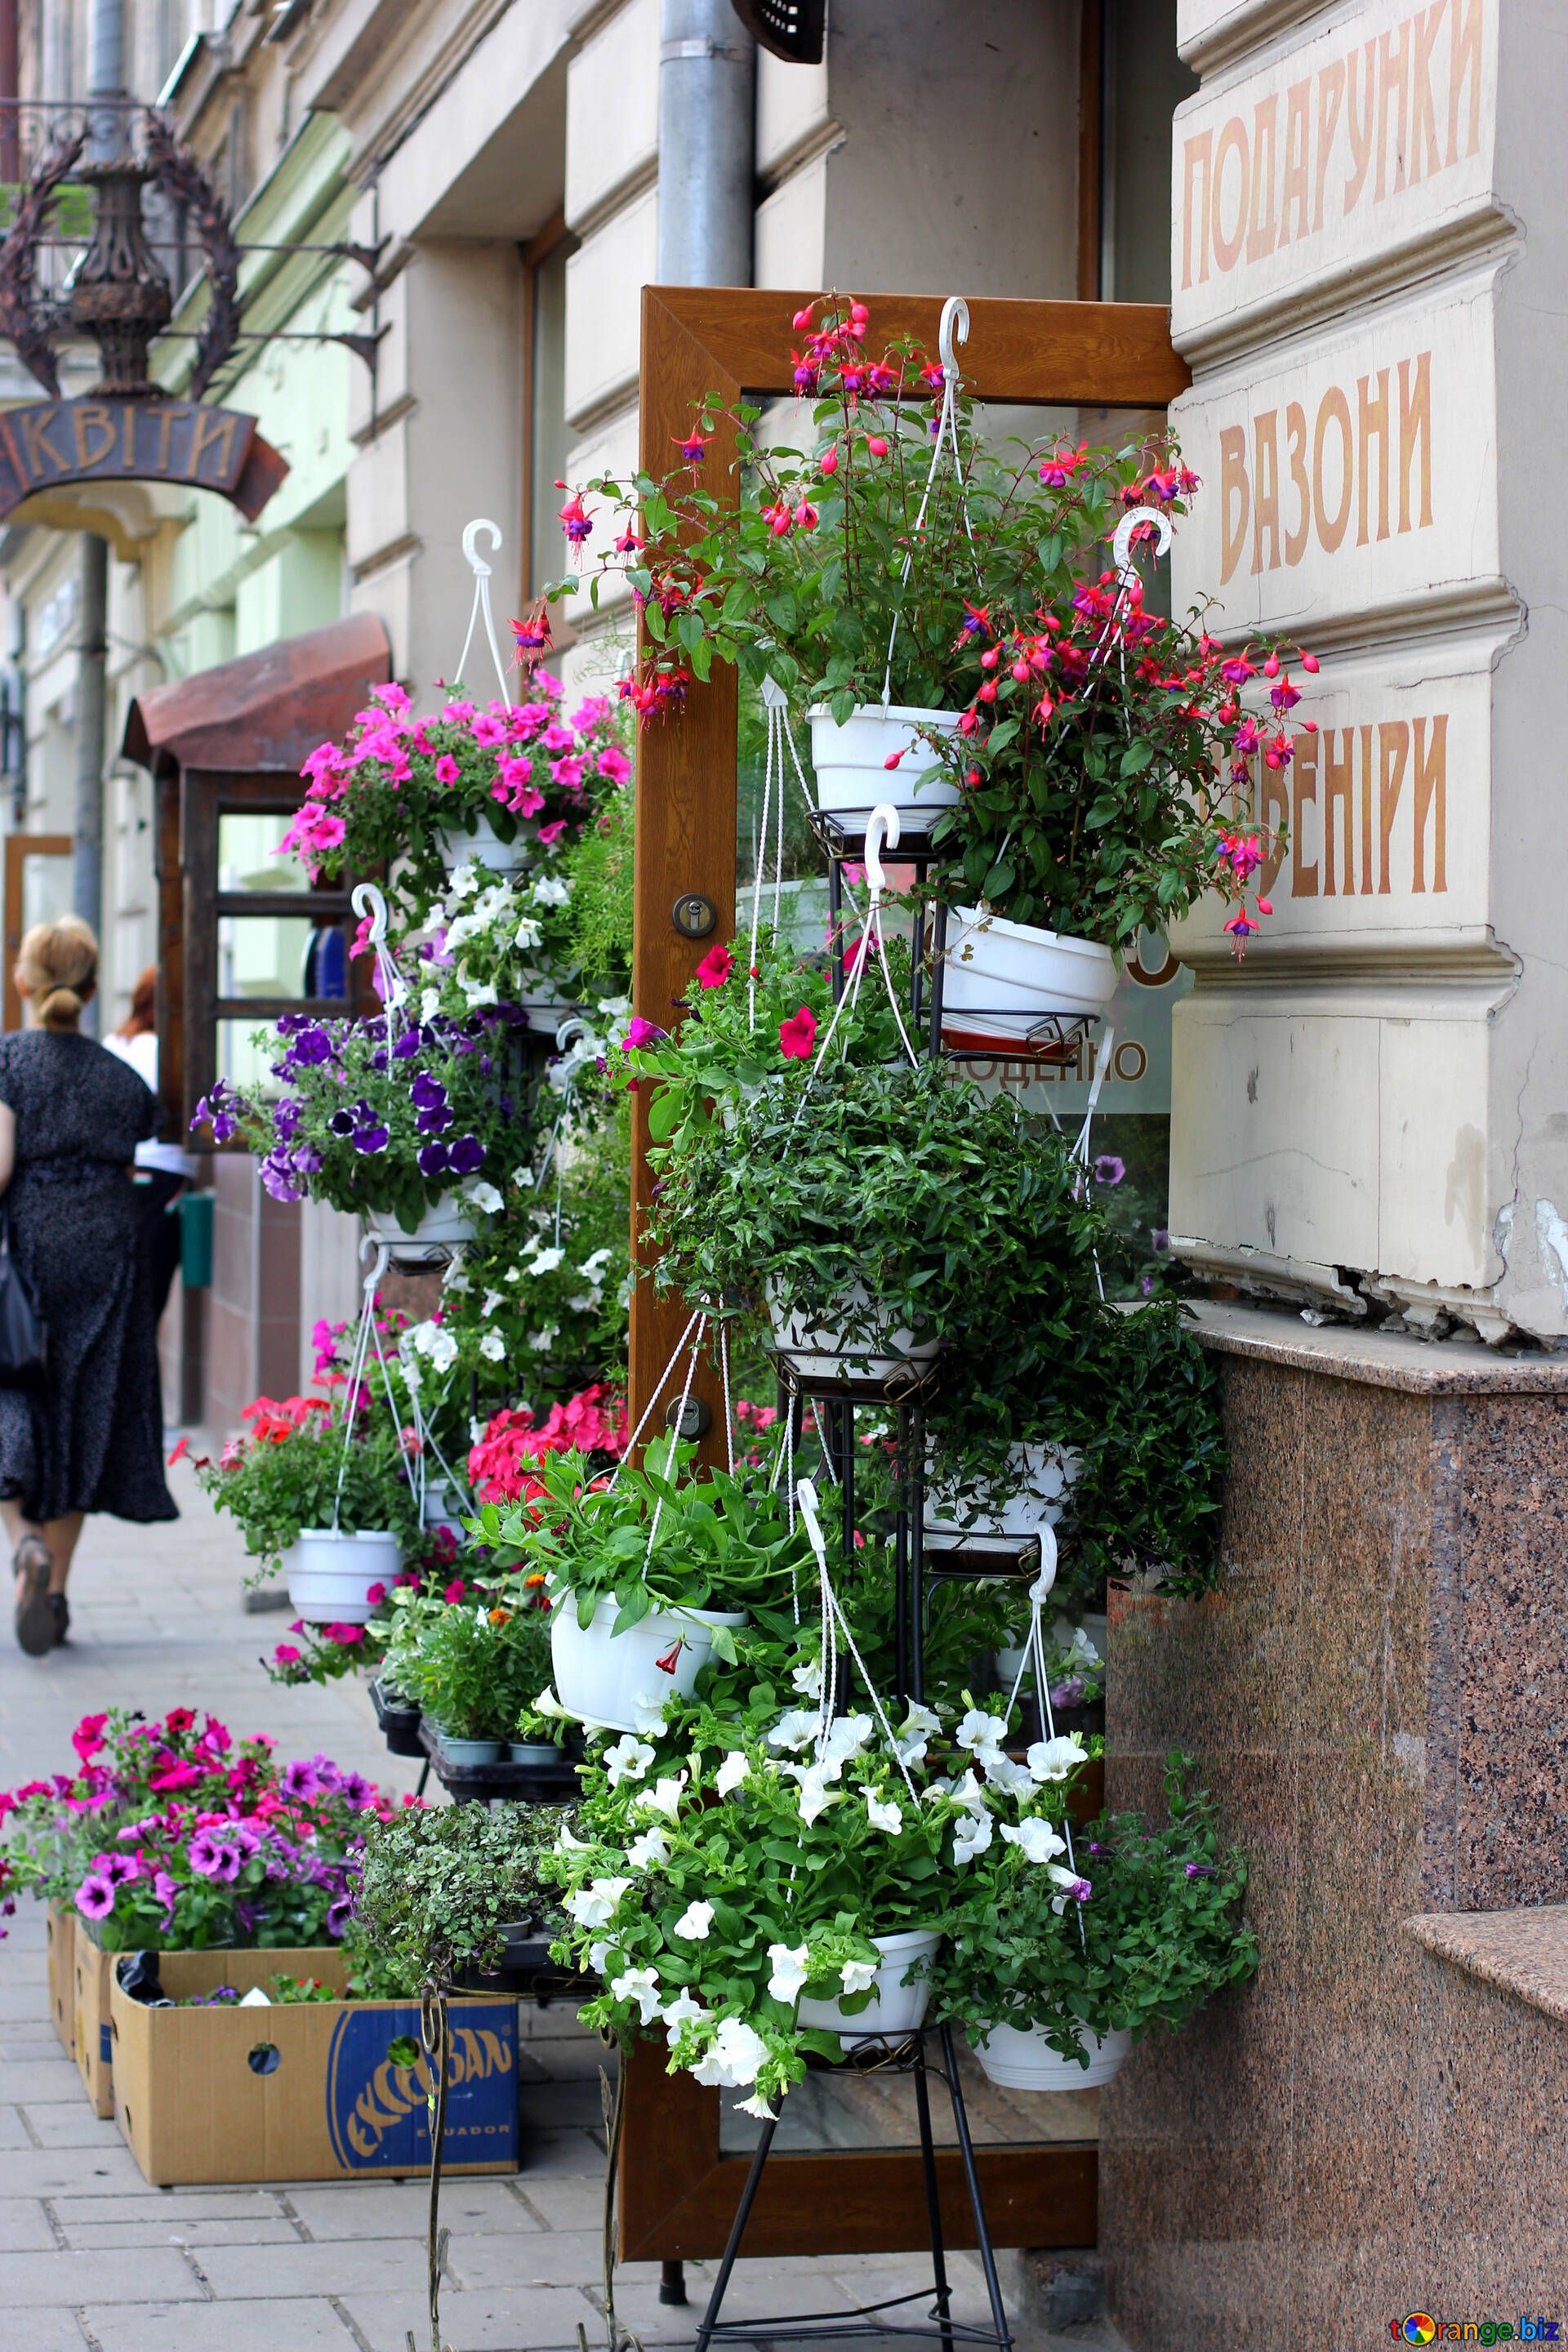 Flowers creepers flowers hanging on a shelf pots door street plants summer № 51779